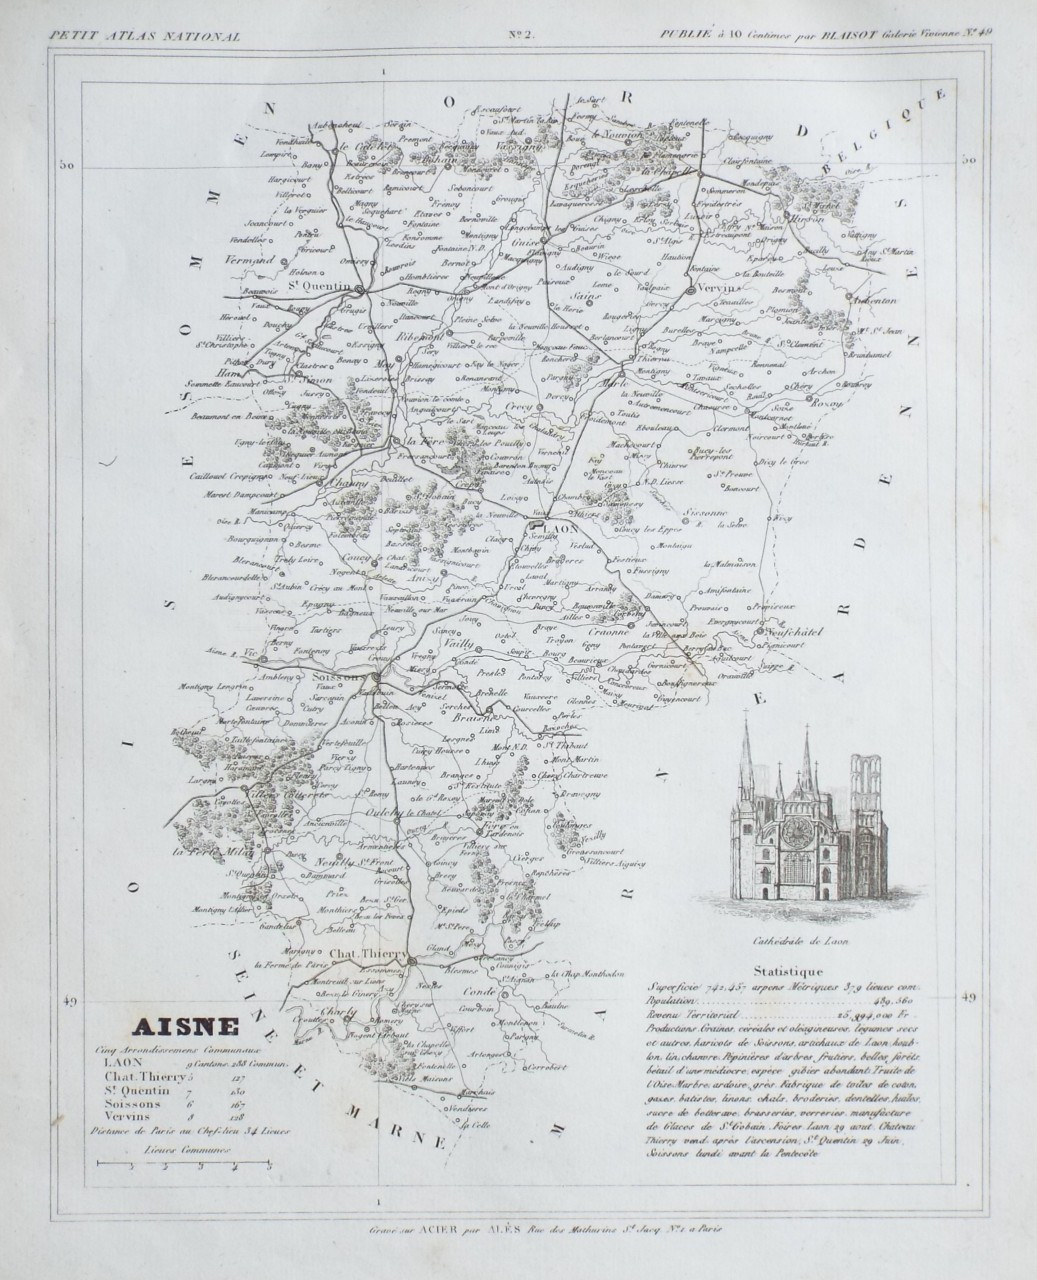 Map of Aisne